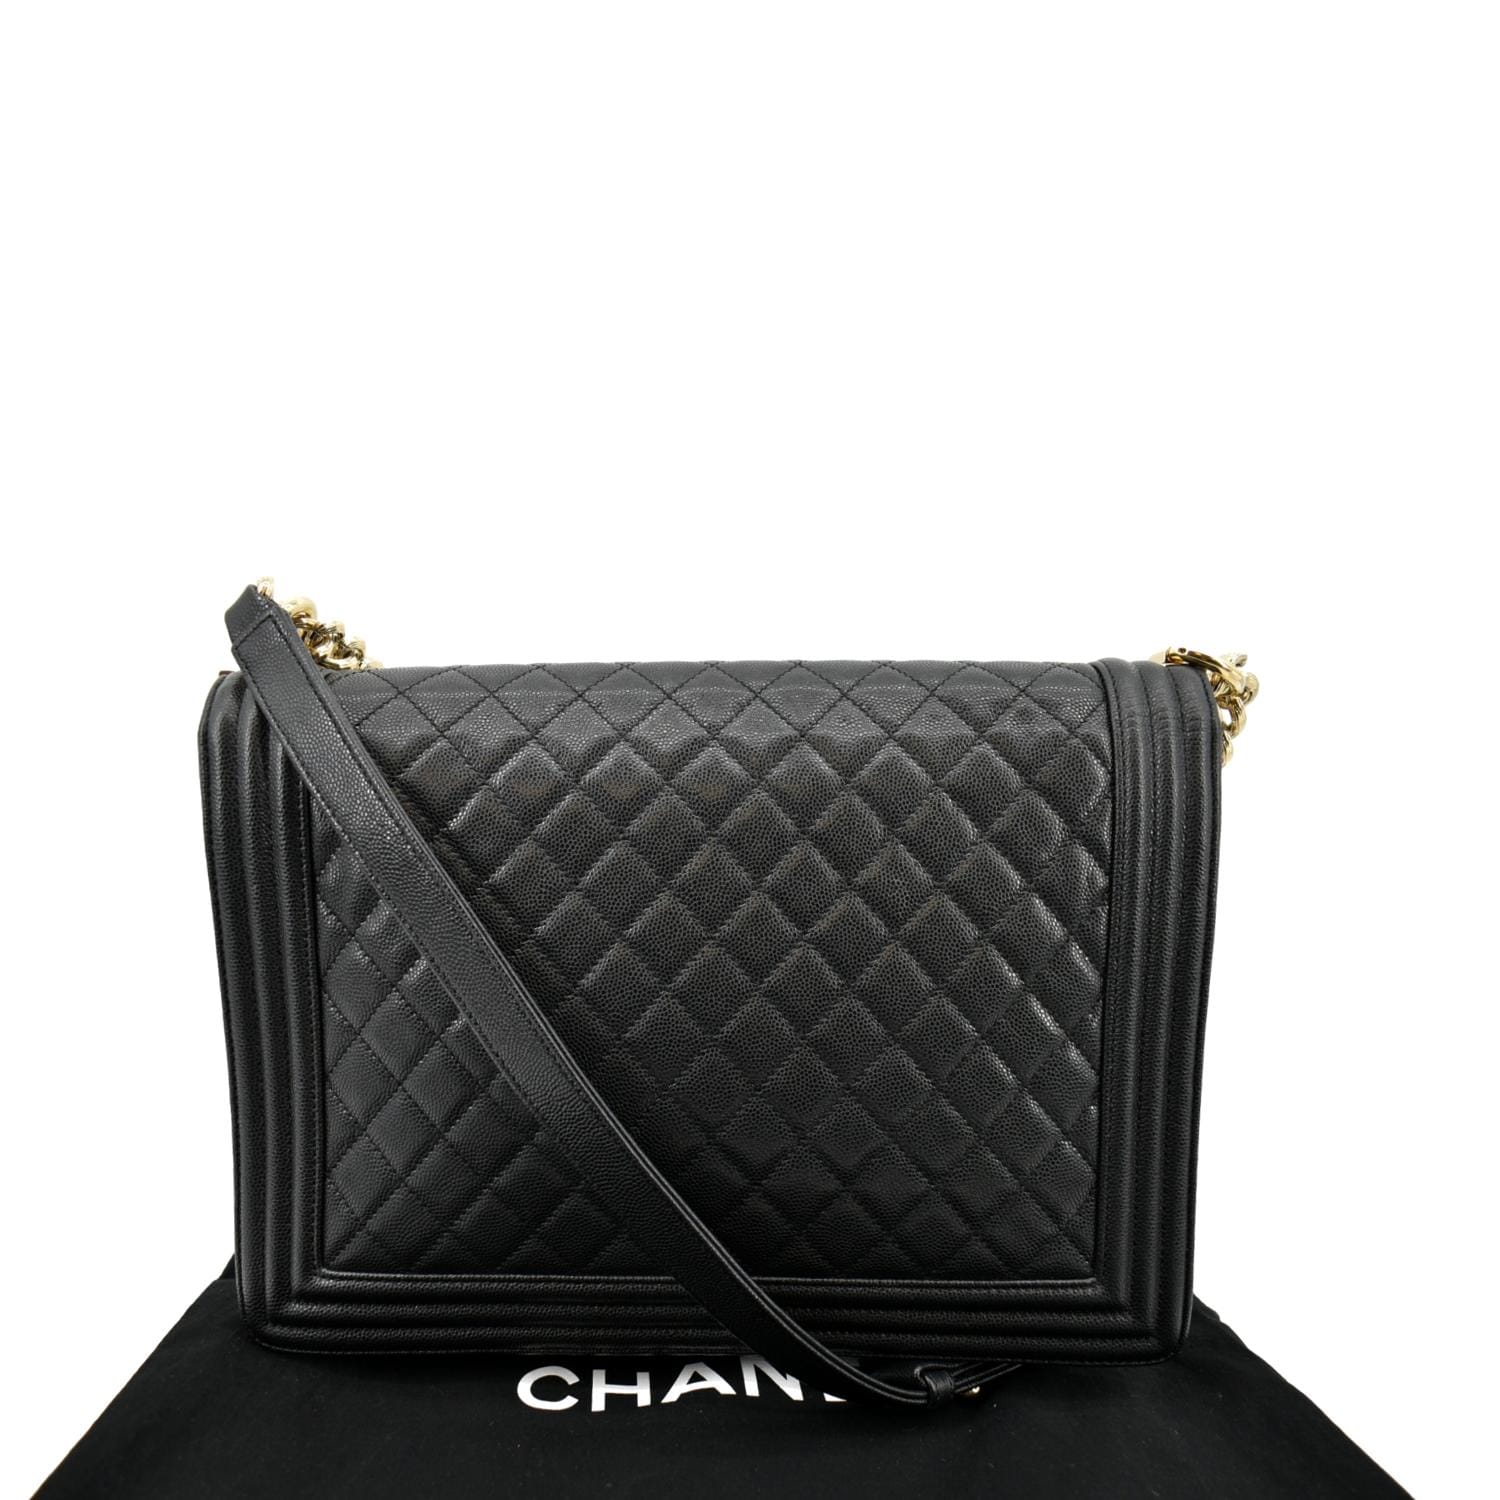 Chanel Large Boy Bag